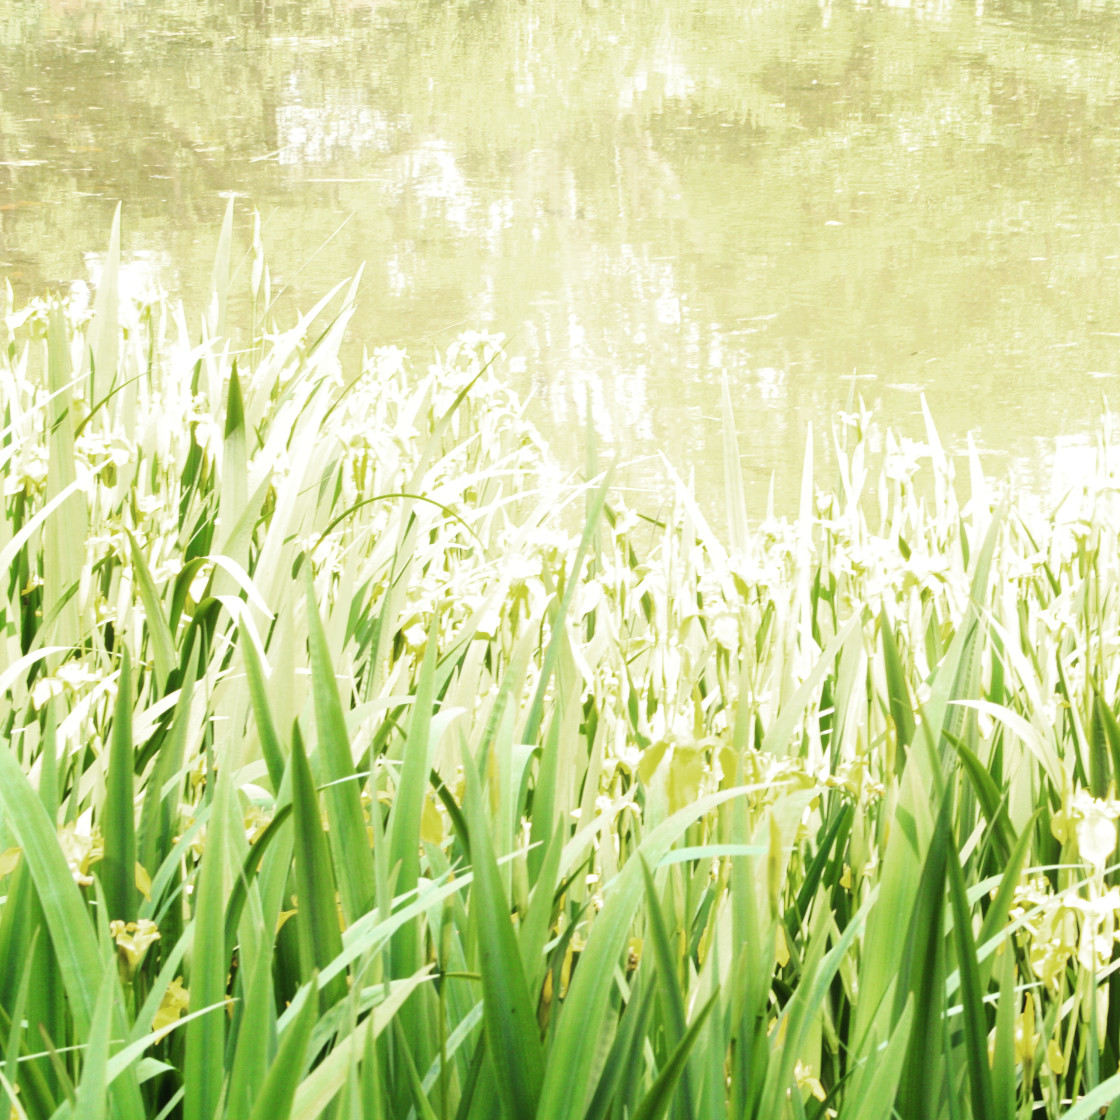 "Green pond" stock image